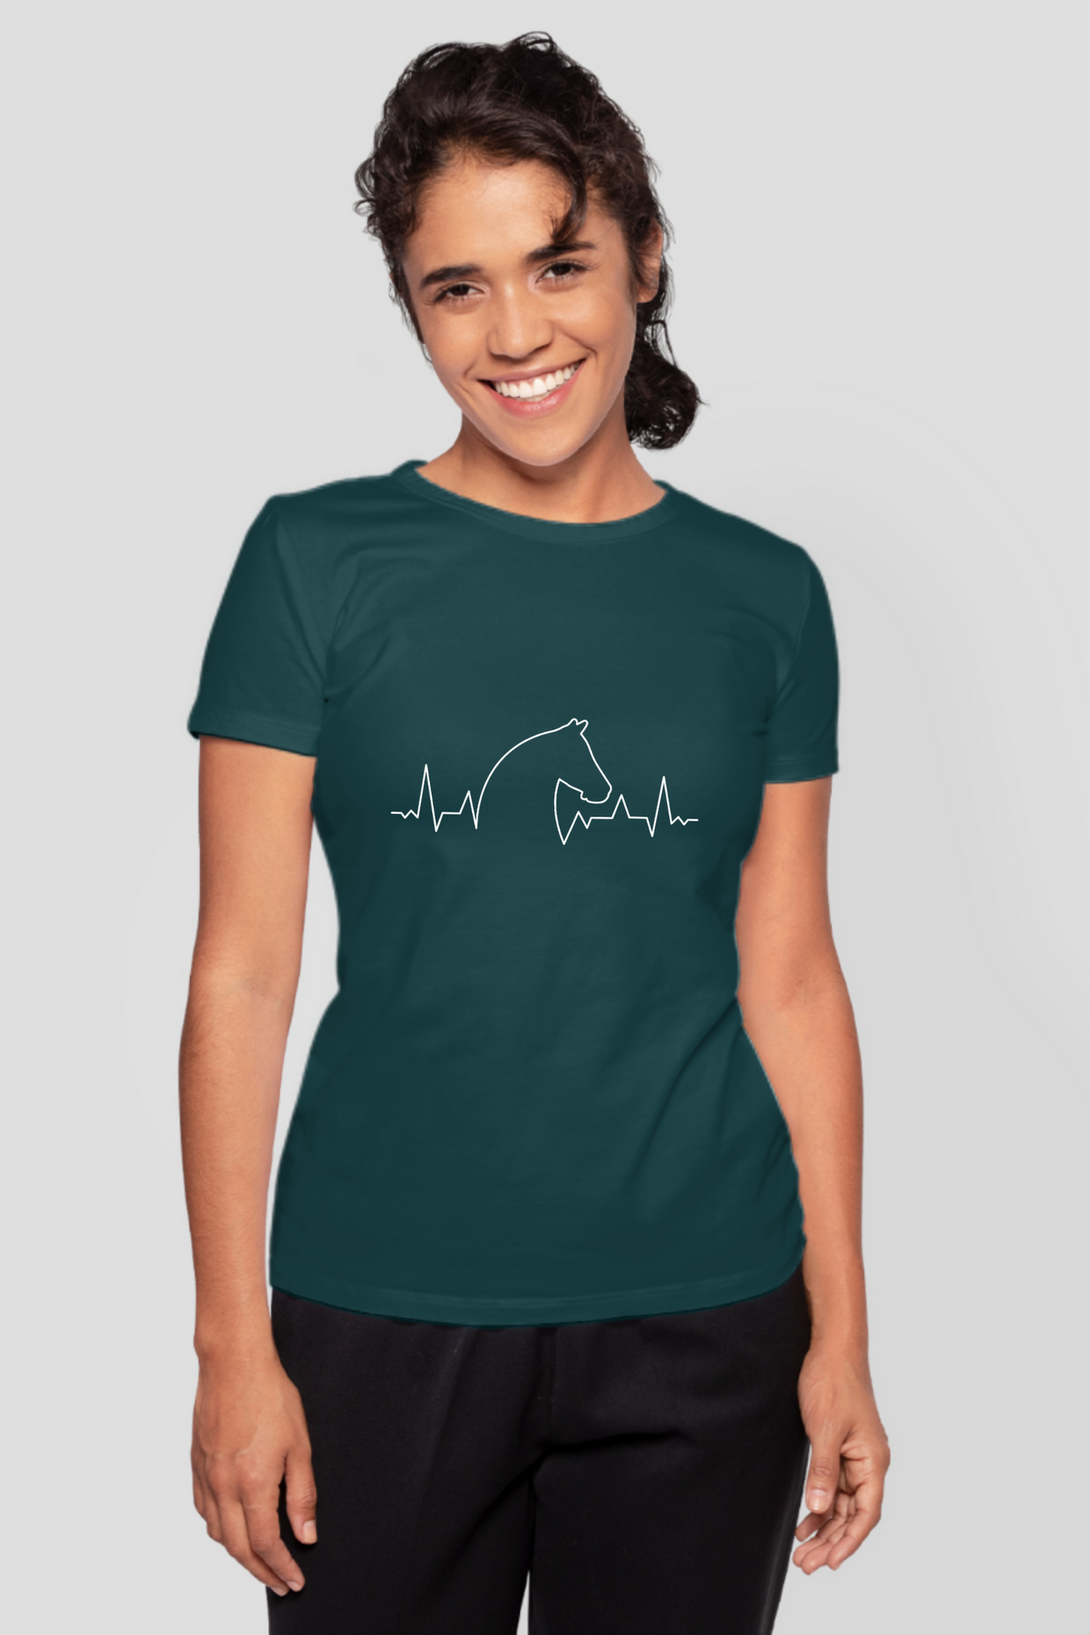 Horse Heartbeat Printed T-Shirt For Women - WowWaves - 13